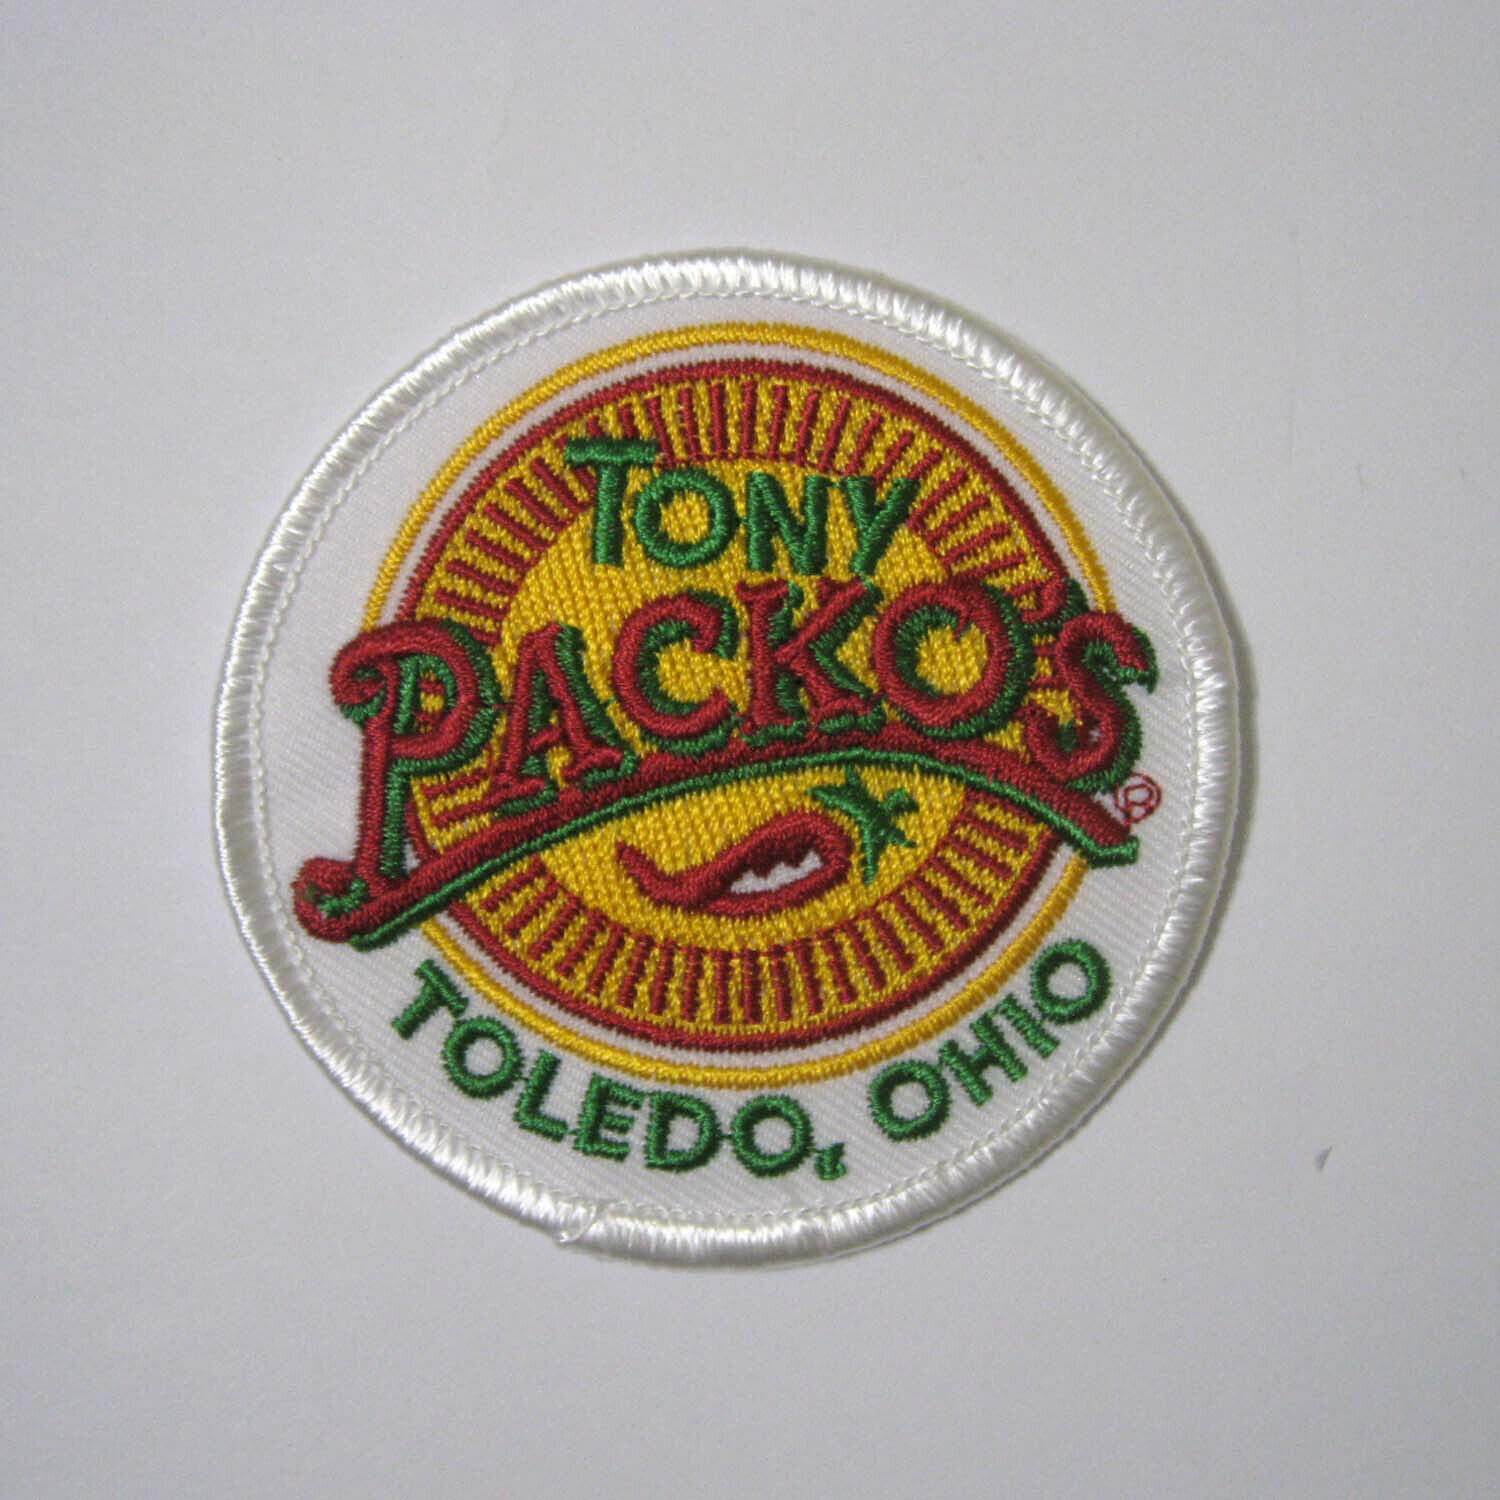 TONY PACKO'S ® Cafe Toledo Ohio - Klinger Of M*A*S*H - 2024 - CLASSIC LOGO PATCH